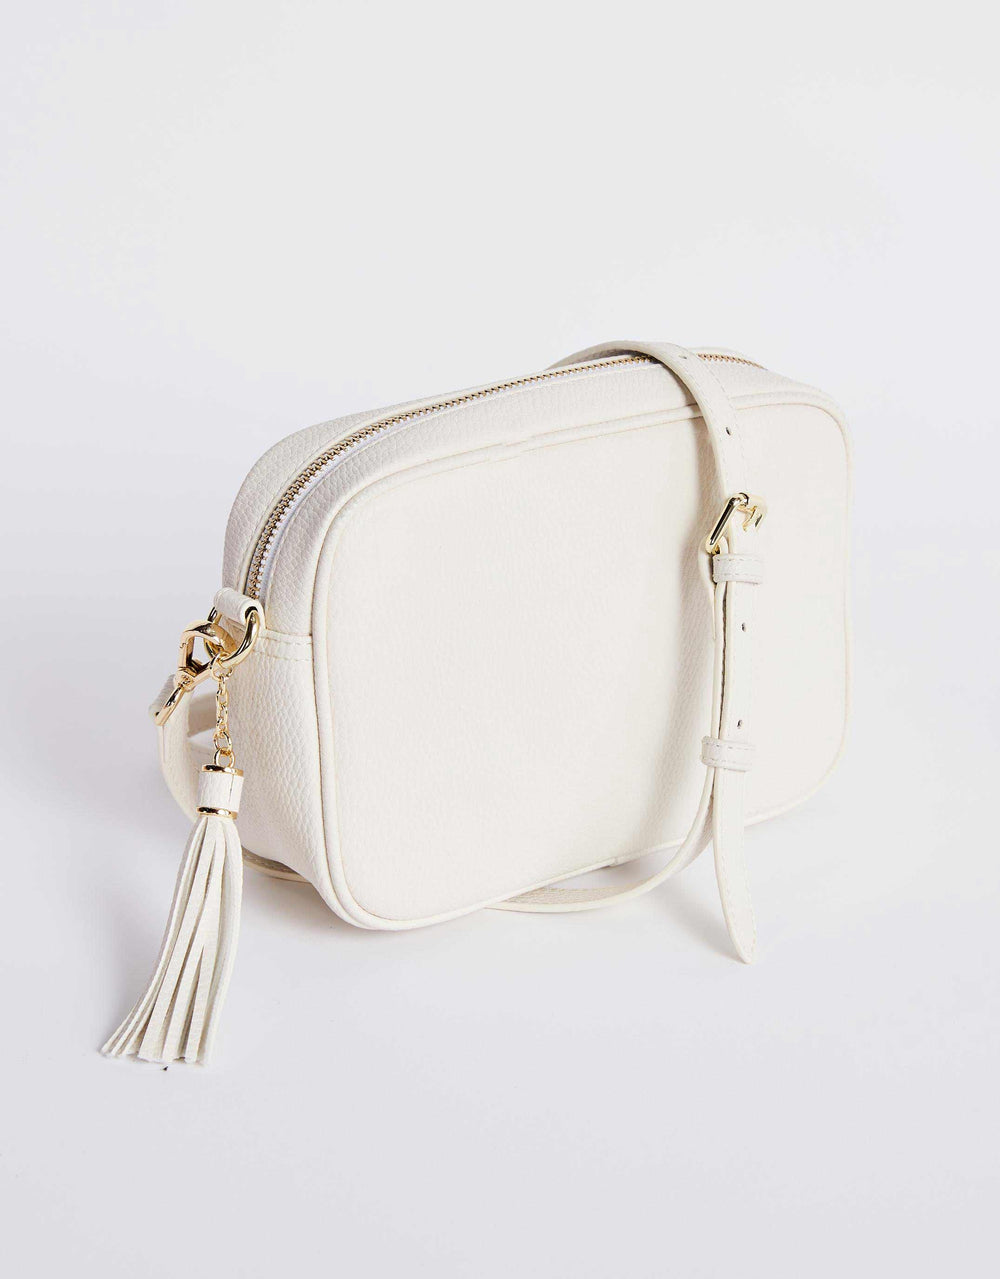 White & Co. - Zoe Crossbody Bag - Ecru/Blush Stripe - White & Co Living Accessories